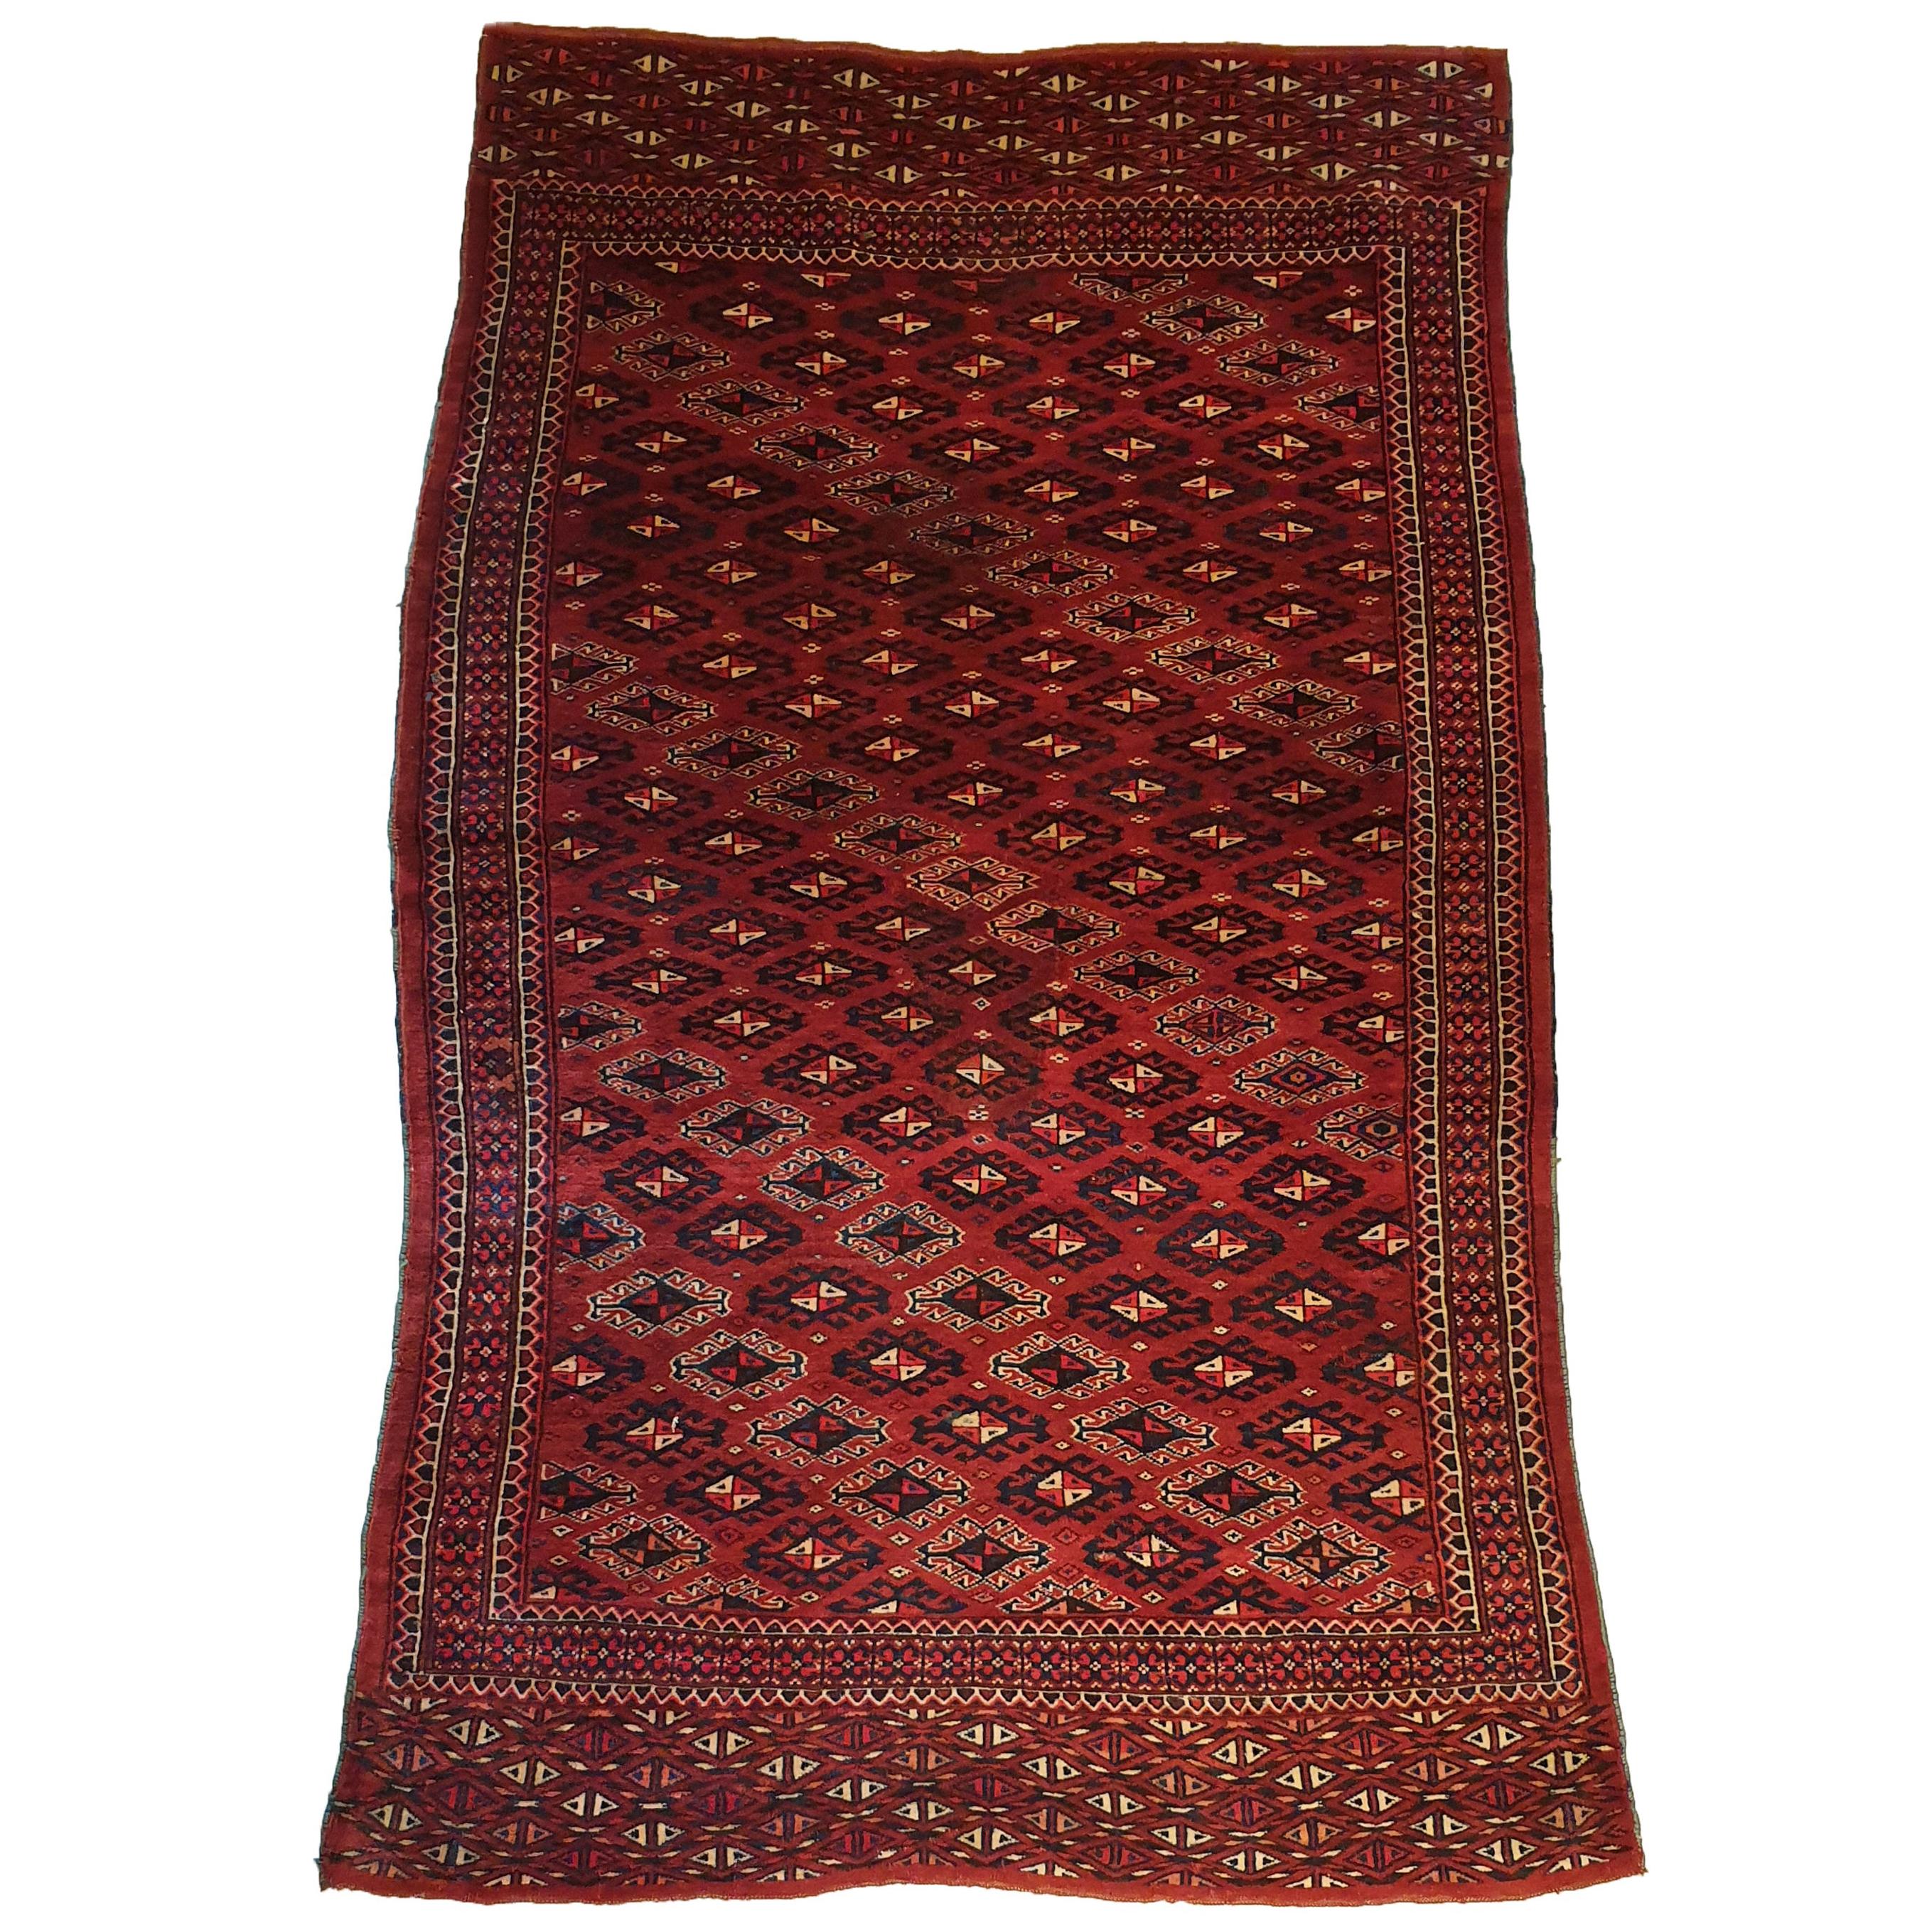 834 - Pretty Turkmen Bukhara Carpet from the 20th Century